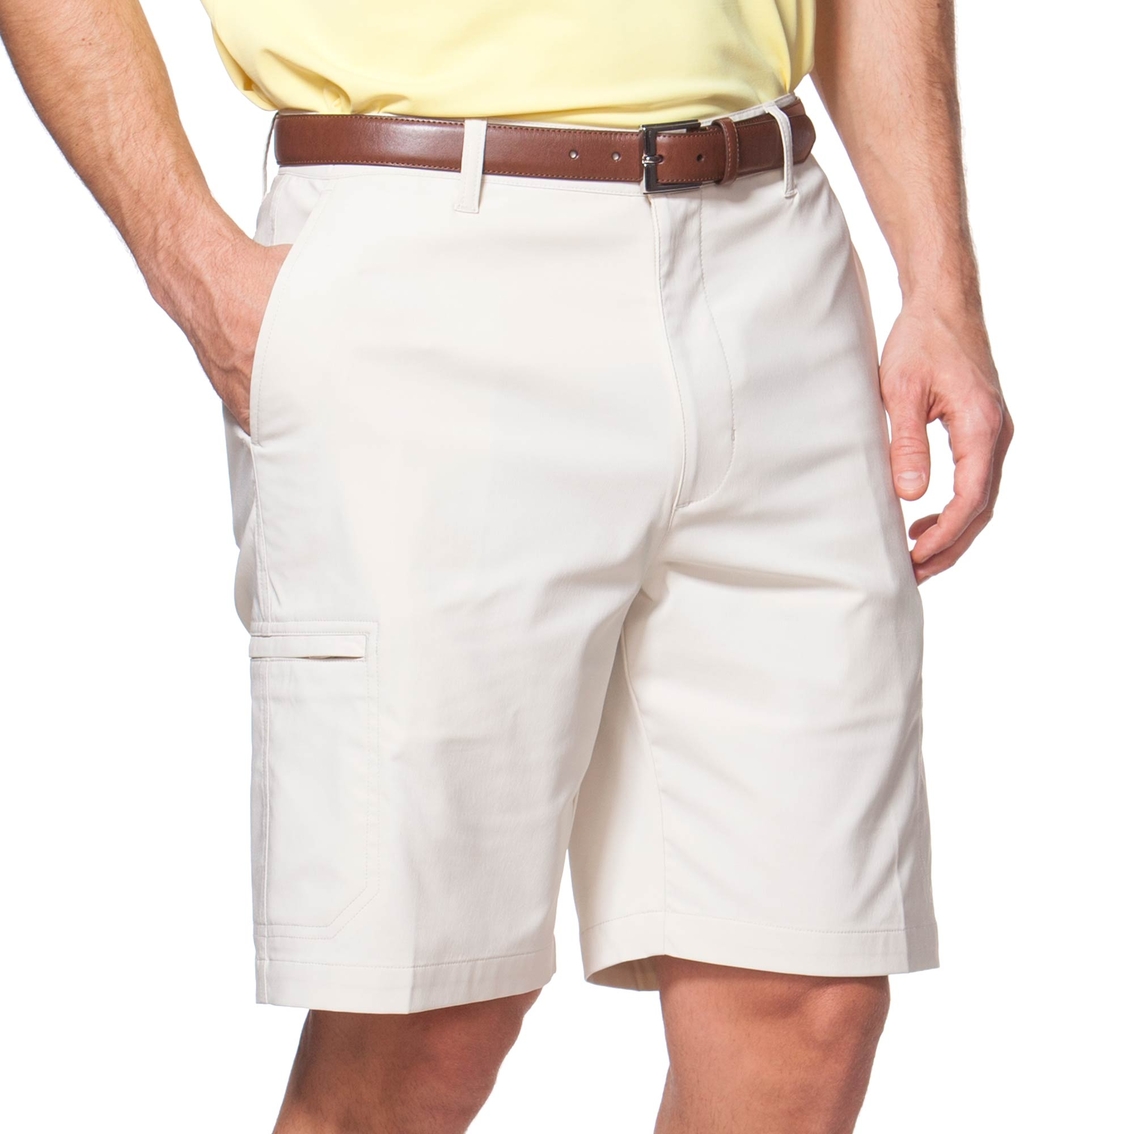 Chaps Cargo Golf Shorts | Shorts | Apparel | Shop The Exchange